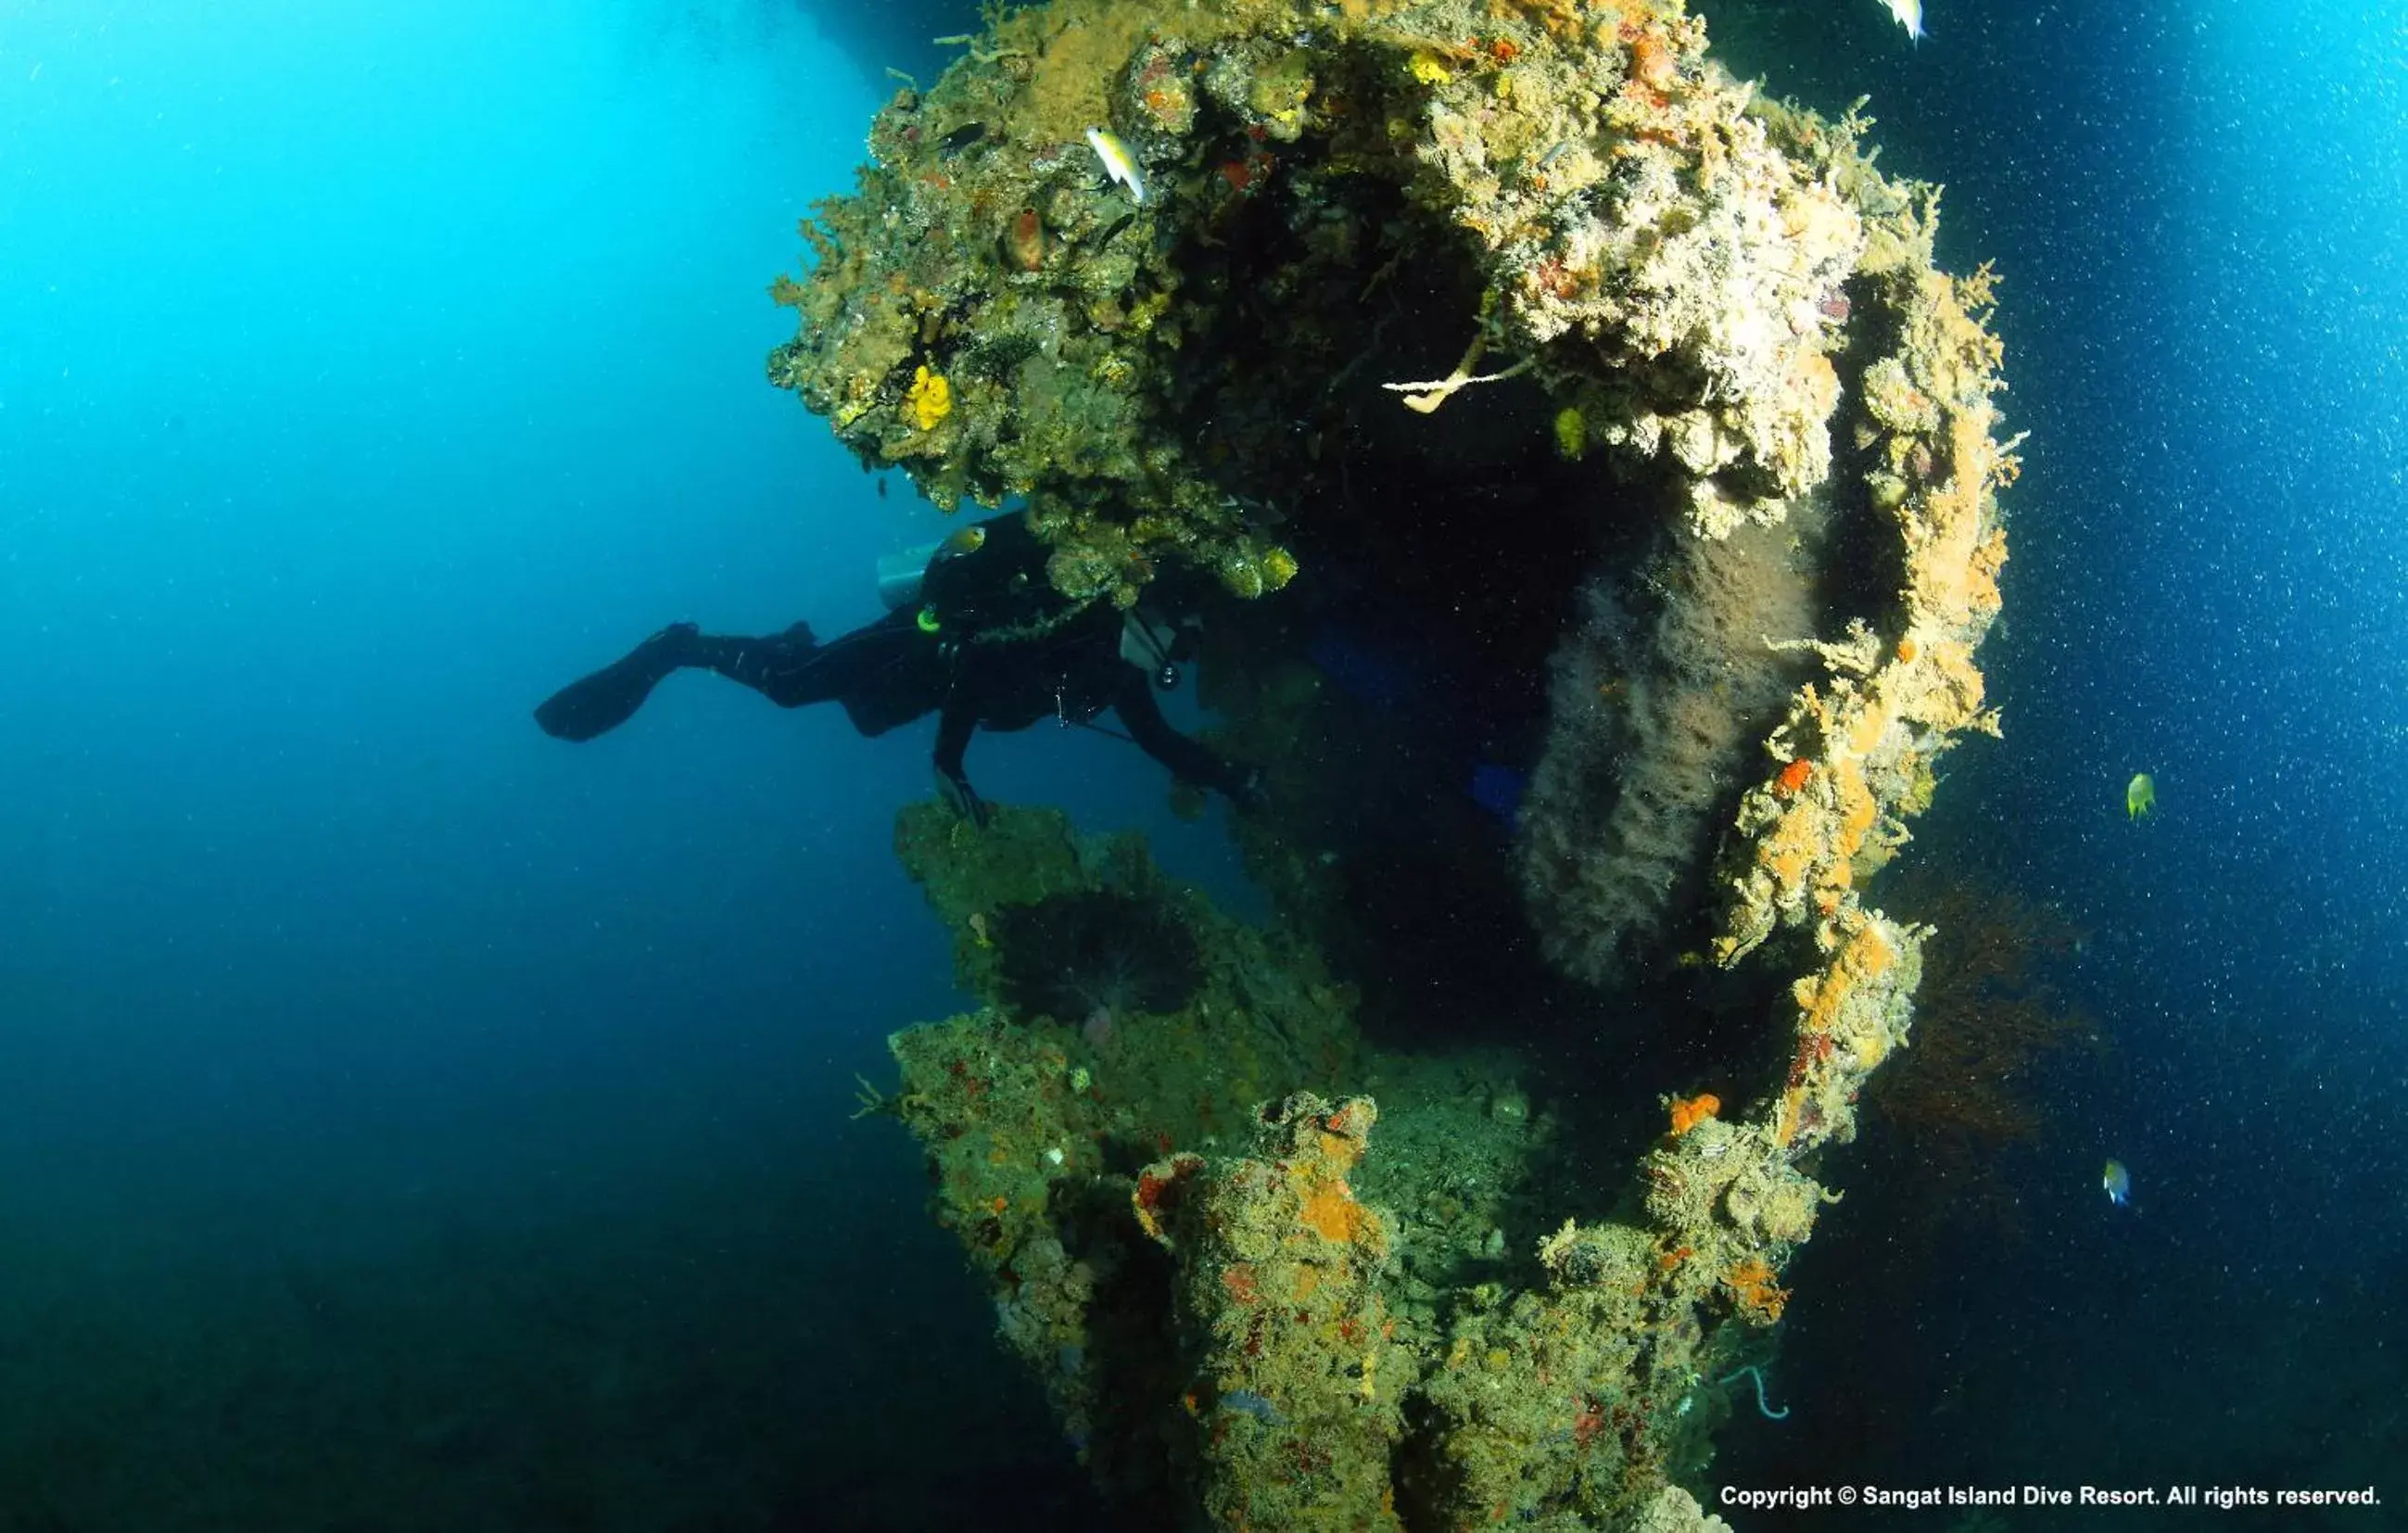 Diving, Bird's-eye View in Sangat Island Dive Resort